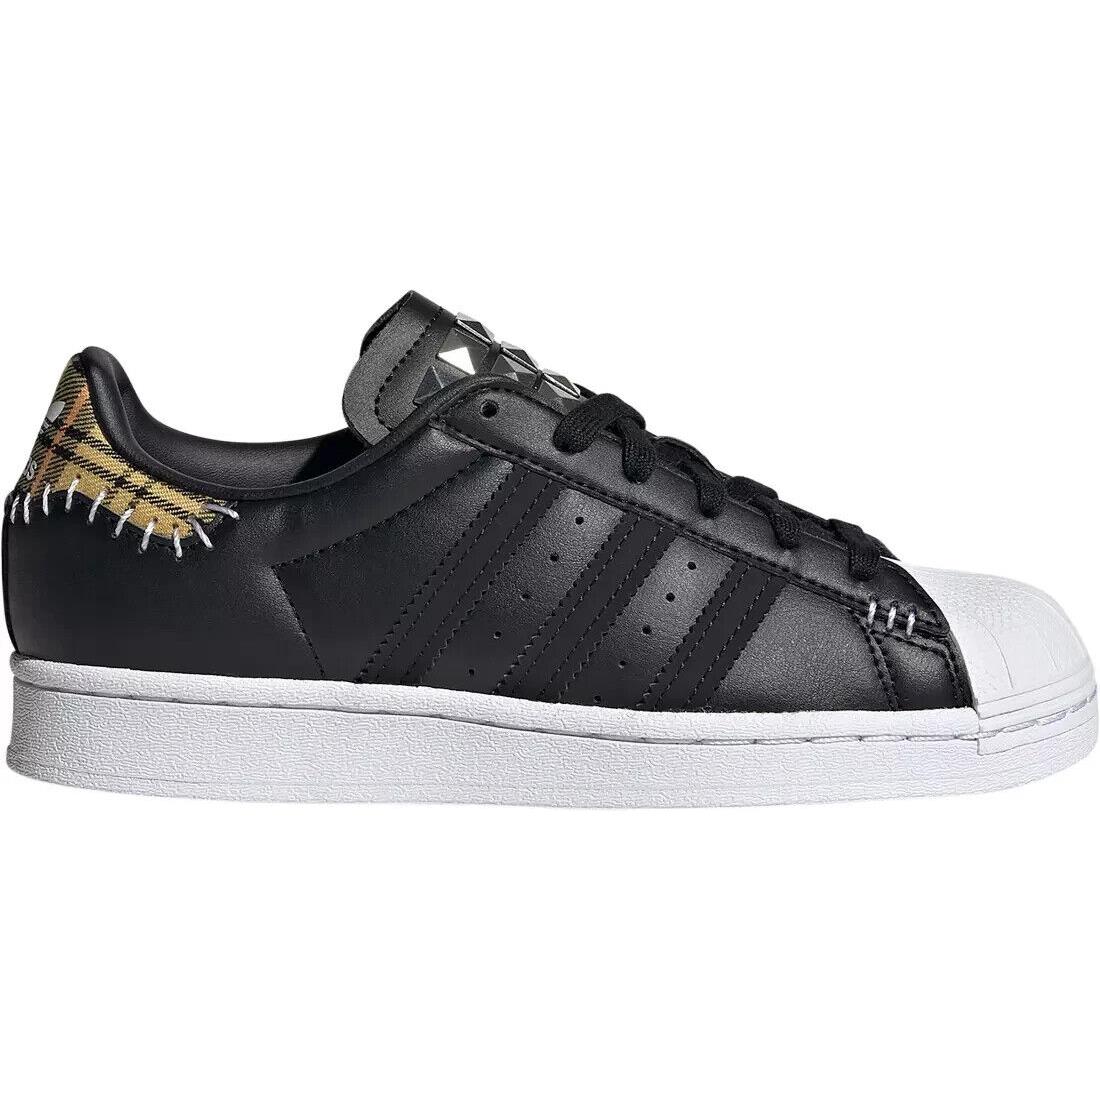 Adidas N7362 Kids Superstar J Sneaker Core Black/team Gold Size 3.5 - Black/Team Gold